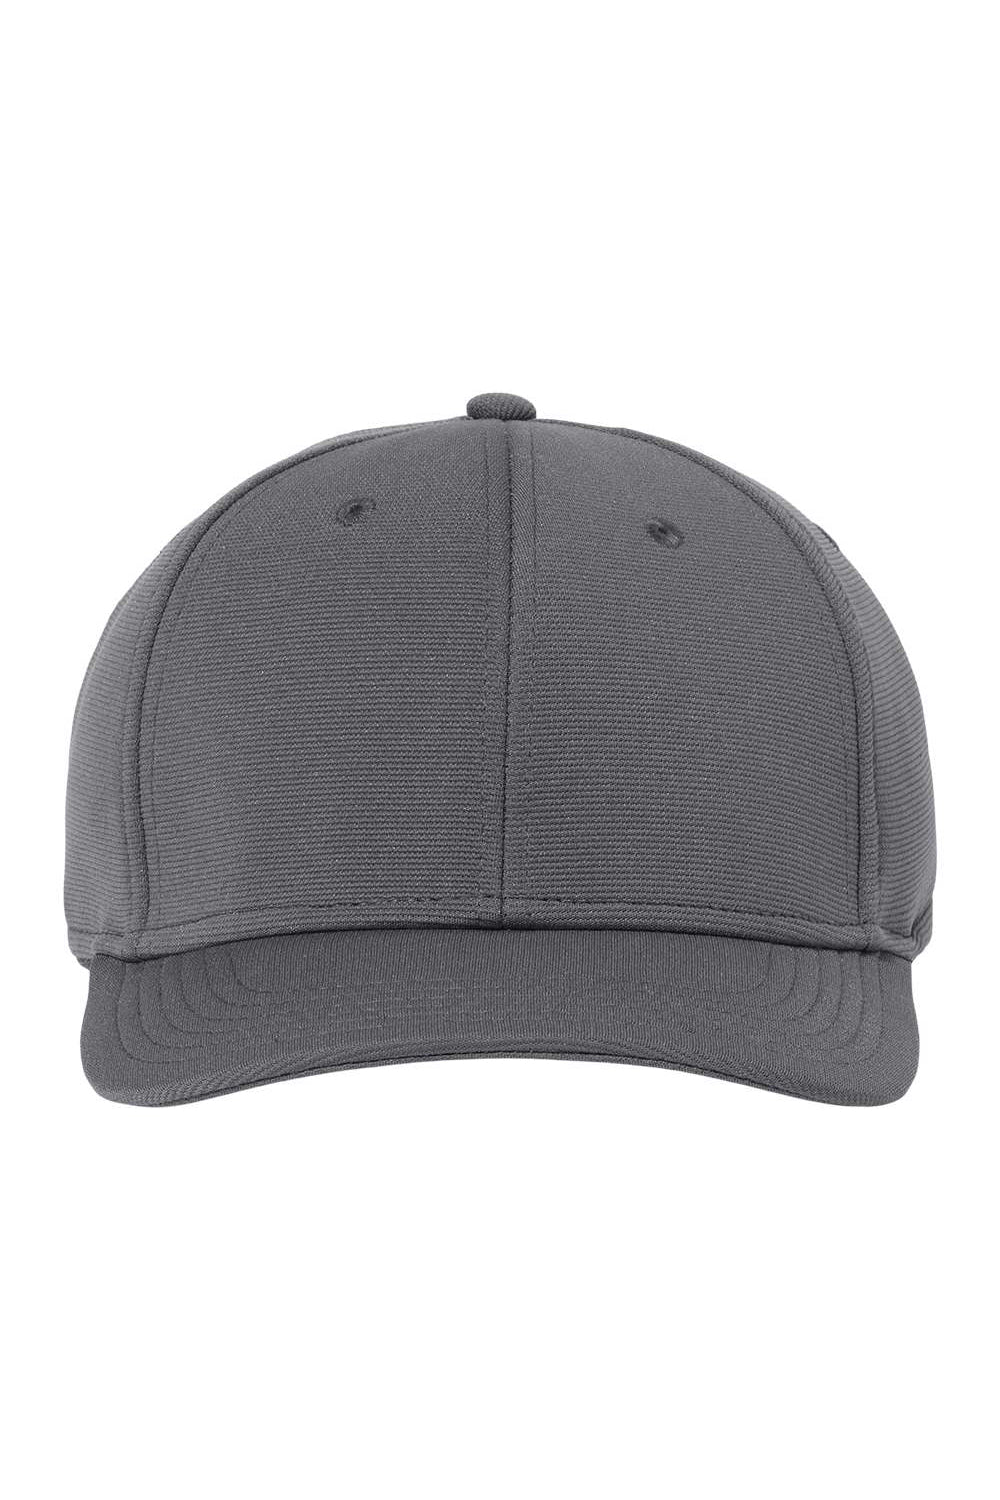 Atlantis Headwear SAND Mens Sustainable Performance Adjustable Hat Dark Grey Flat Front